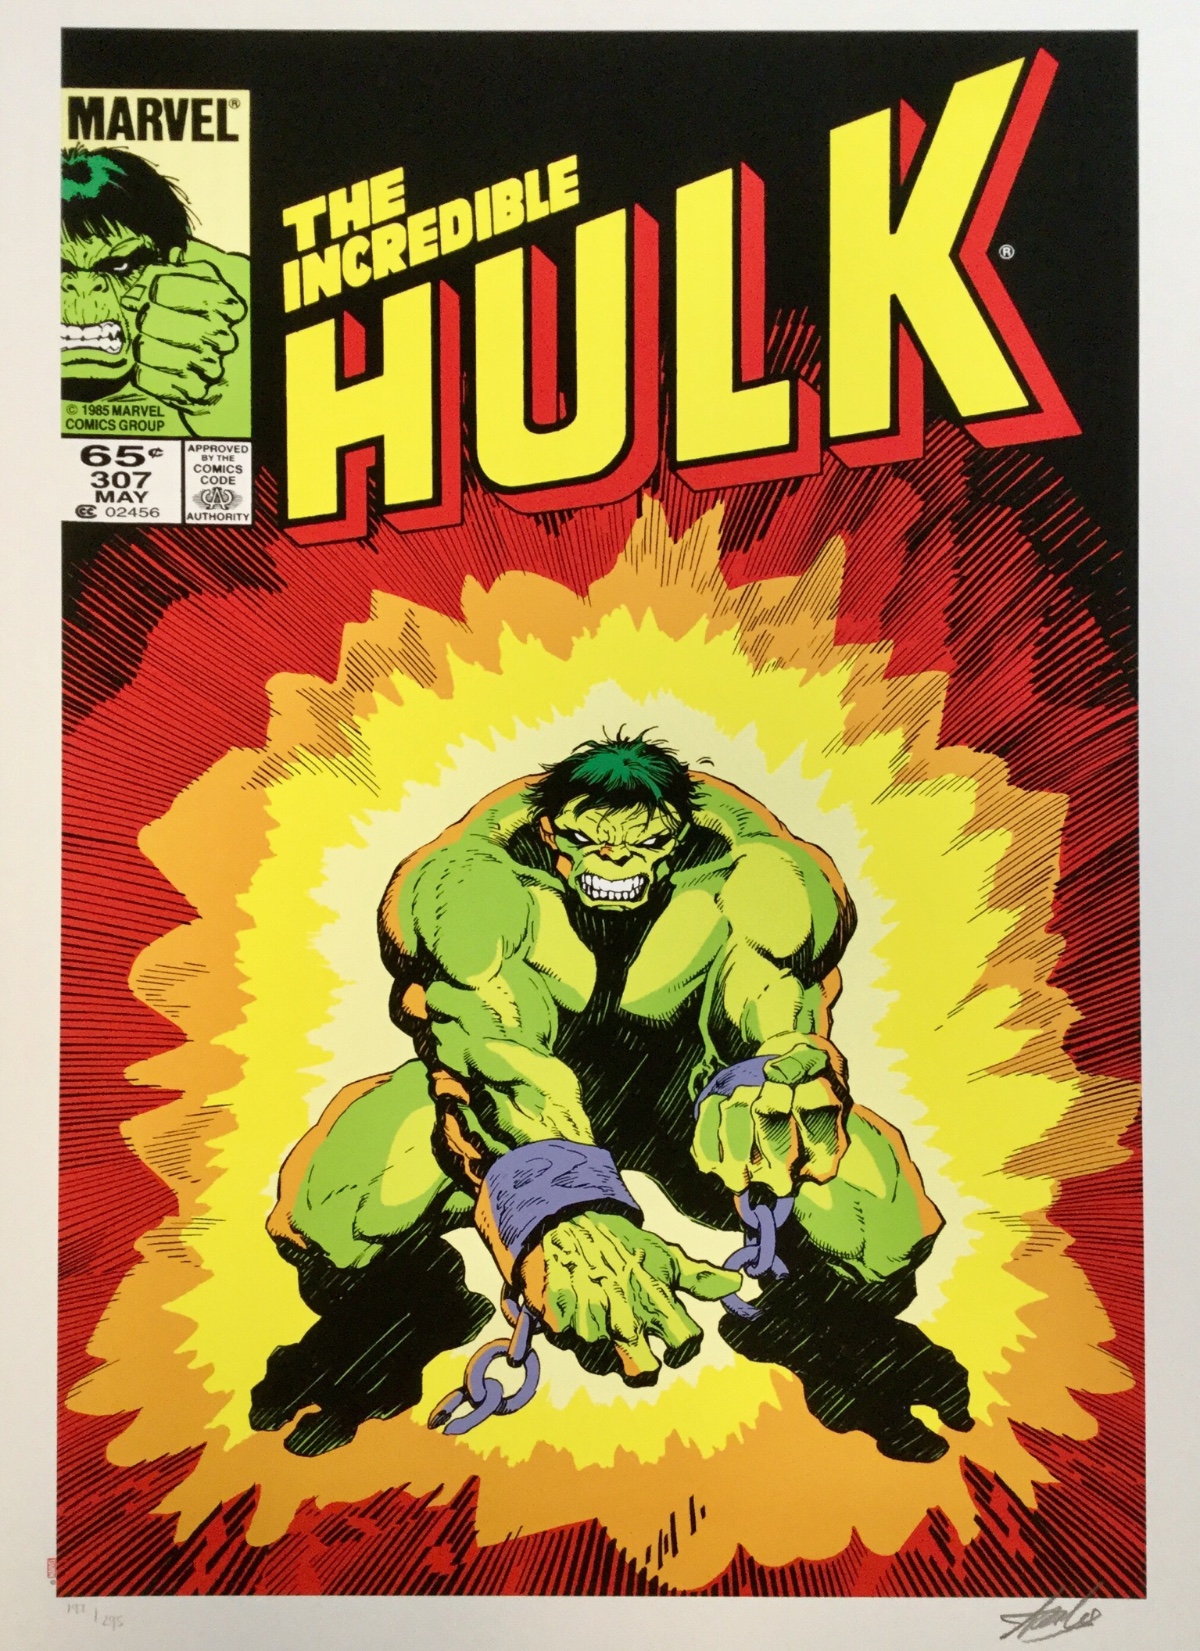 The Incredible Hulk by Marvel Comics - Stan Lee